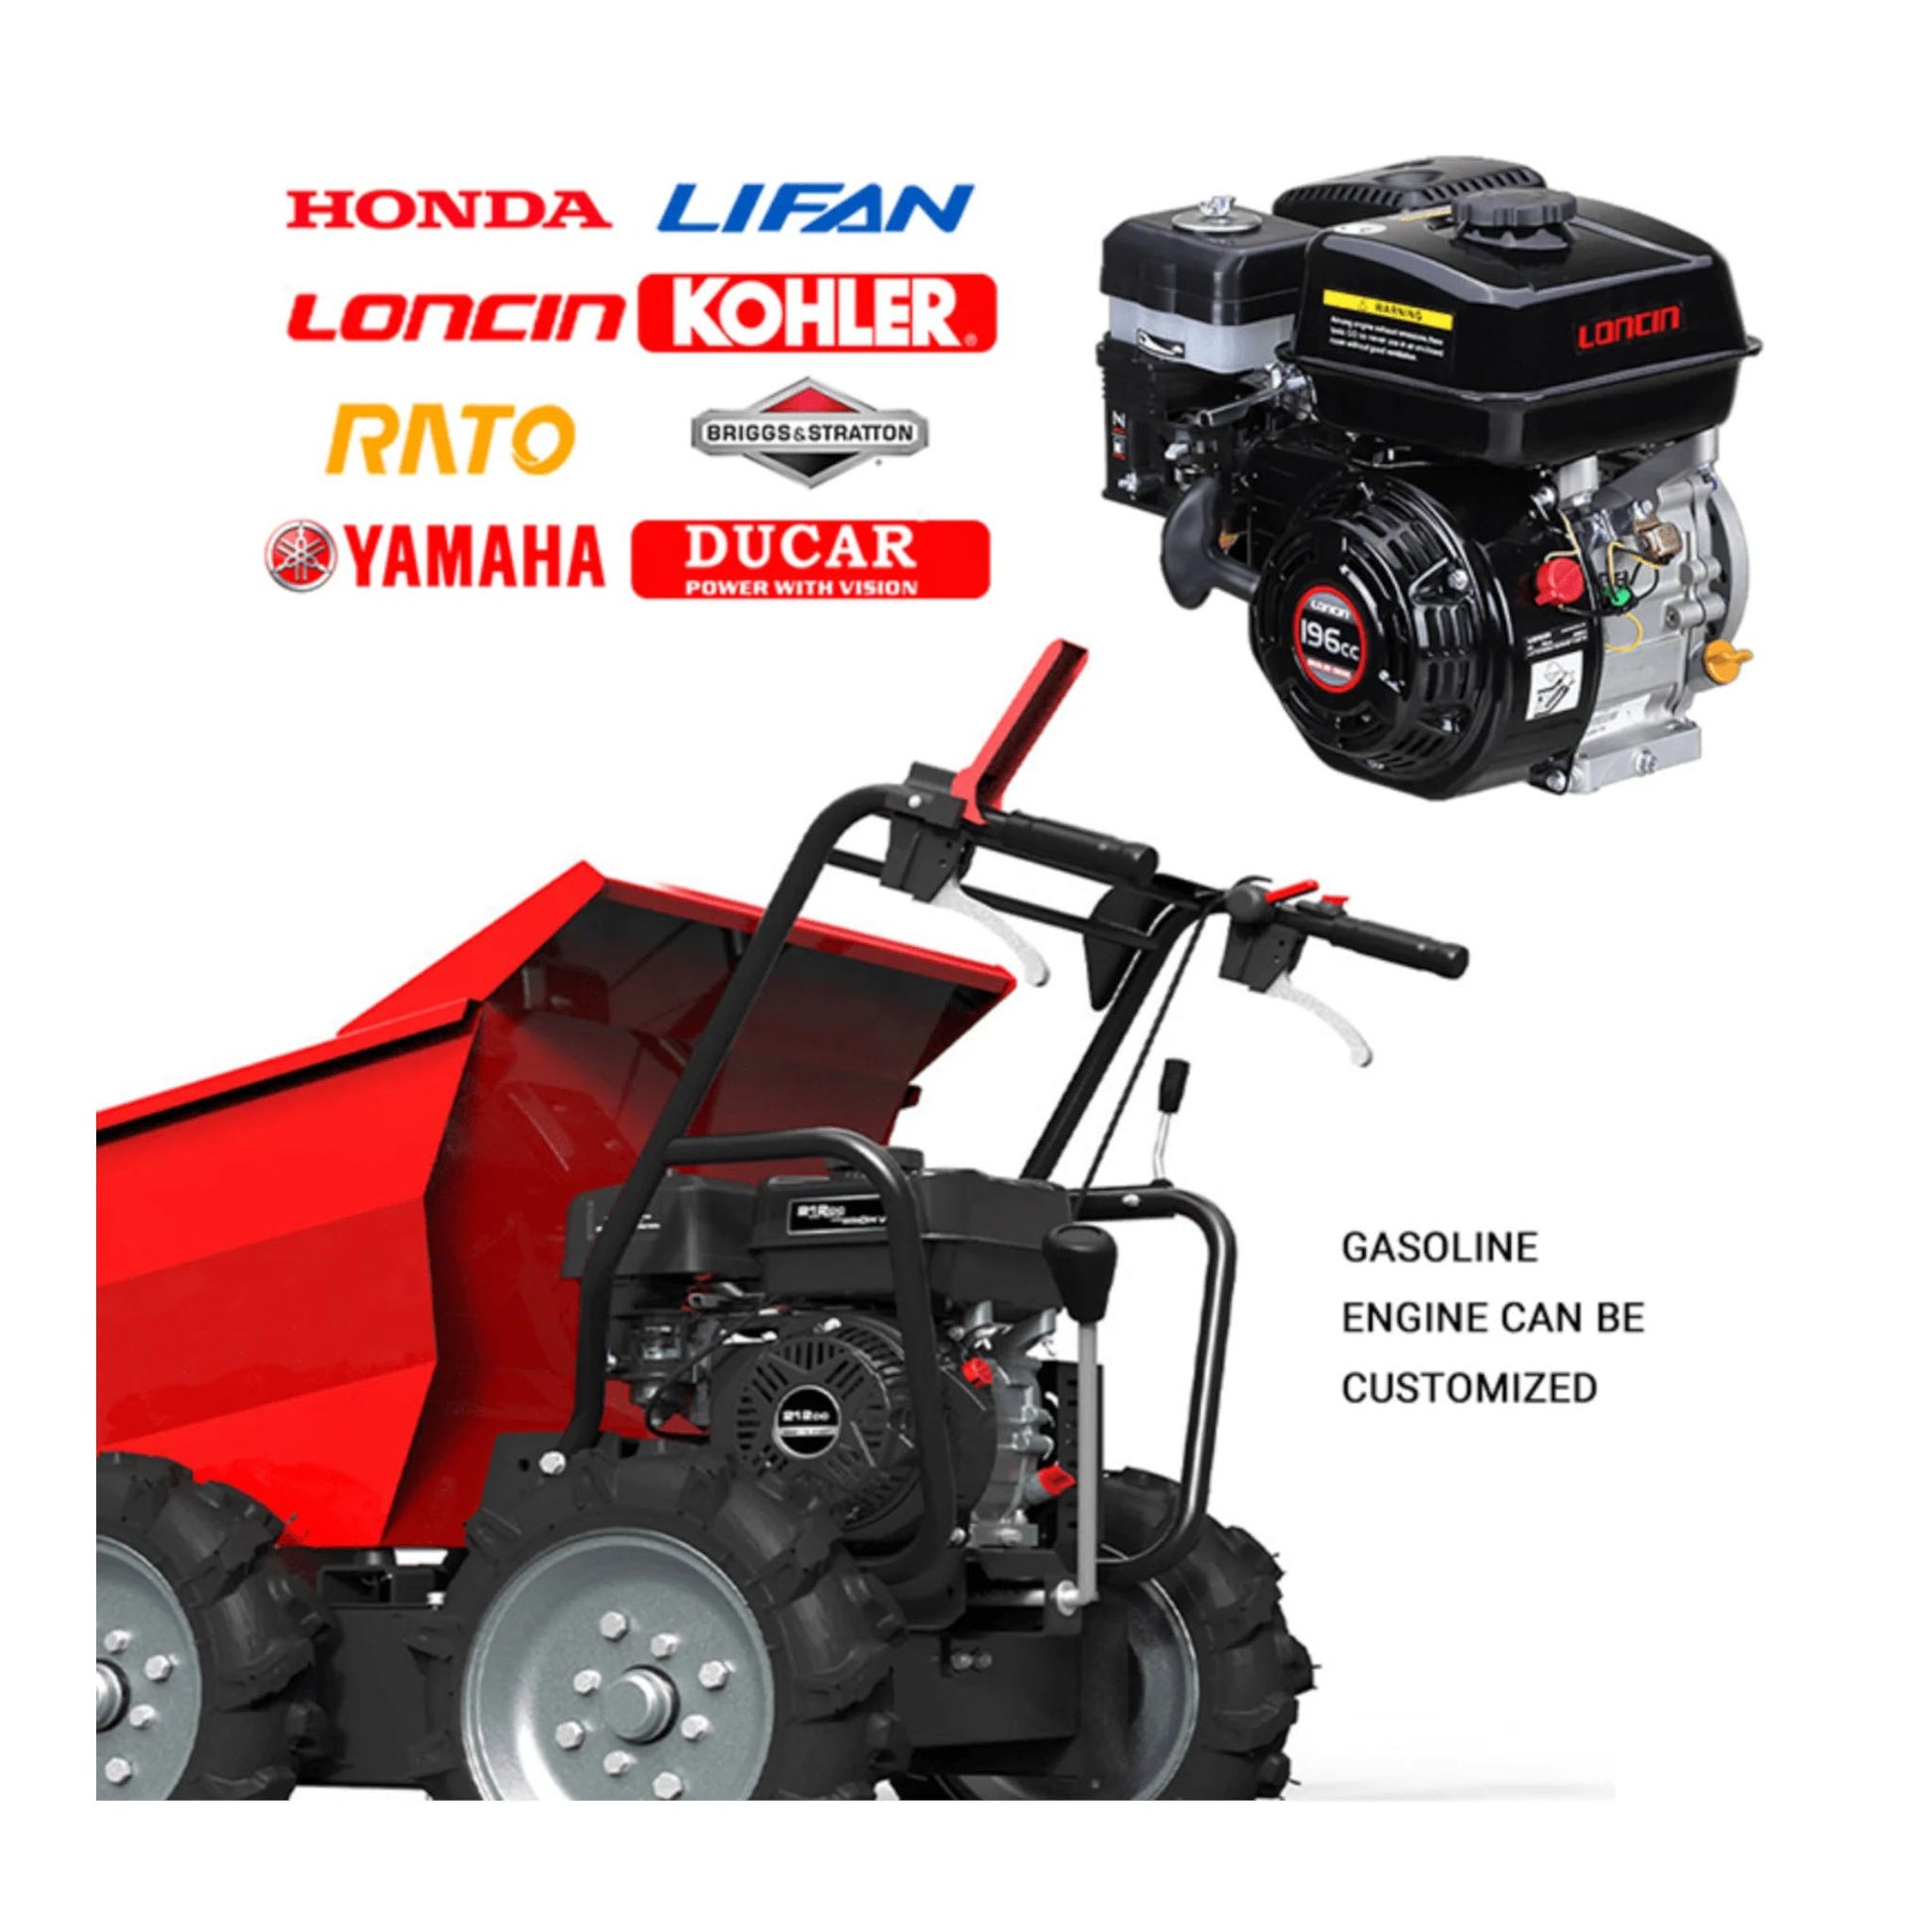 HOCT30 4X4 Honda Wheelbarrow 300 kg (660 lb) Load Capacity